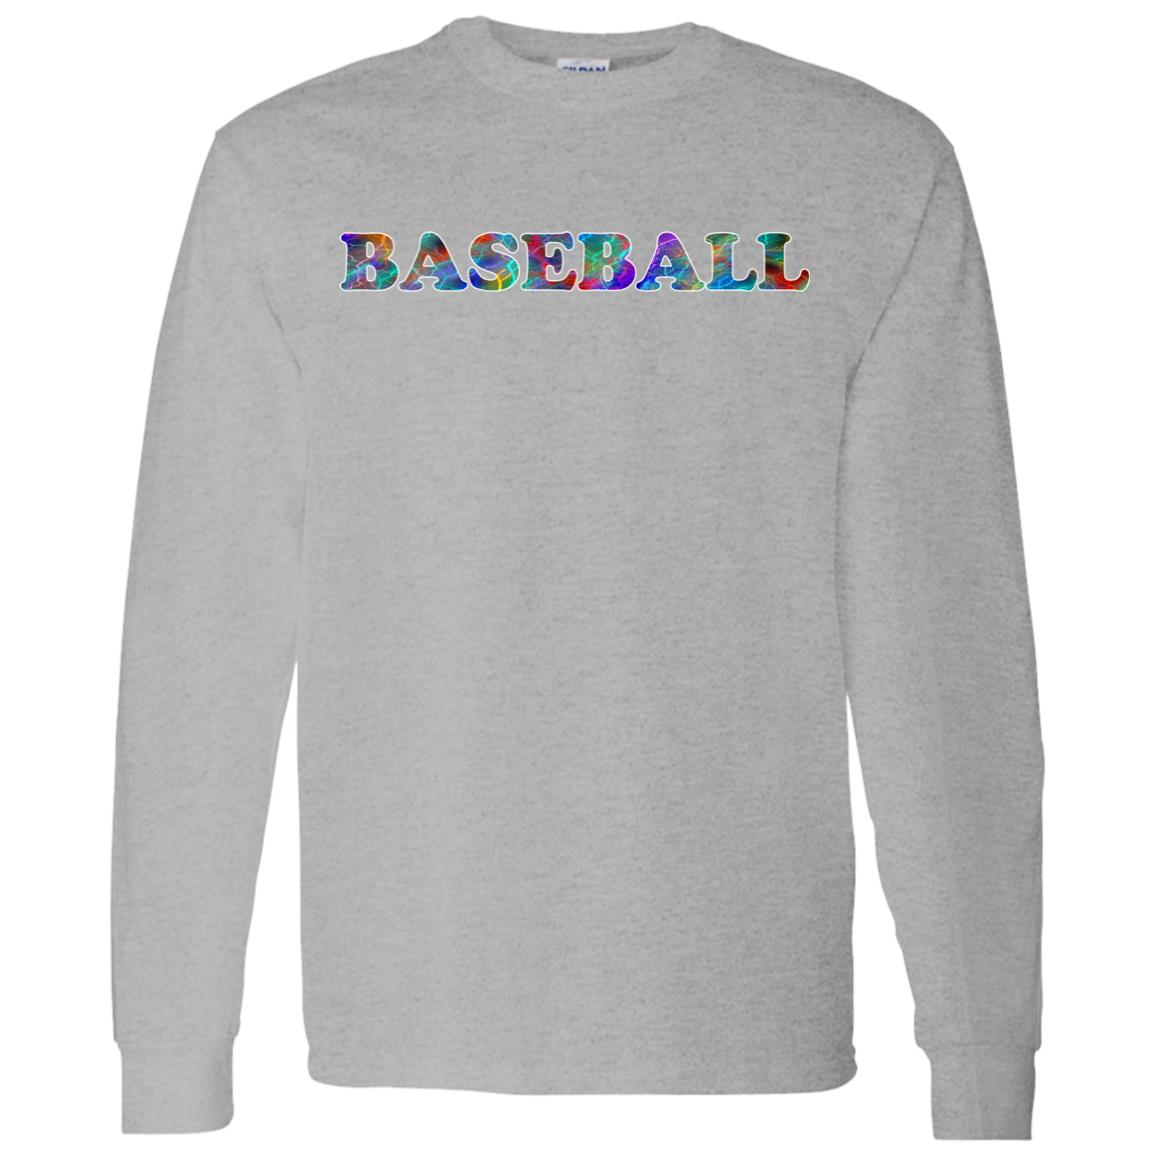 Baseball Long Sleeve Sport T-Shirt